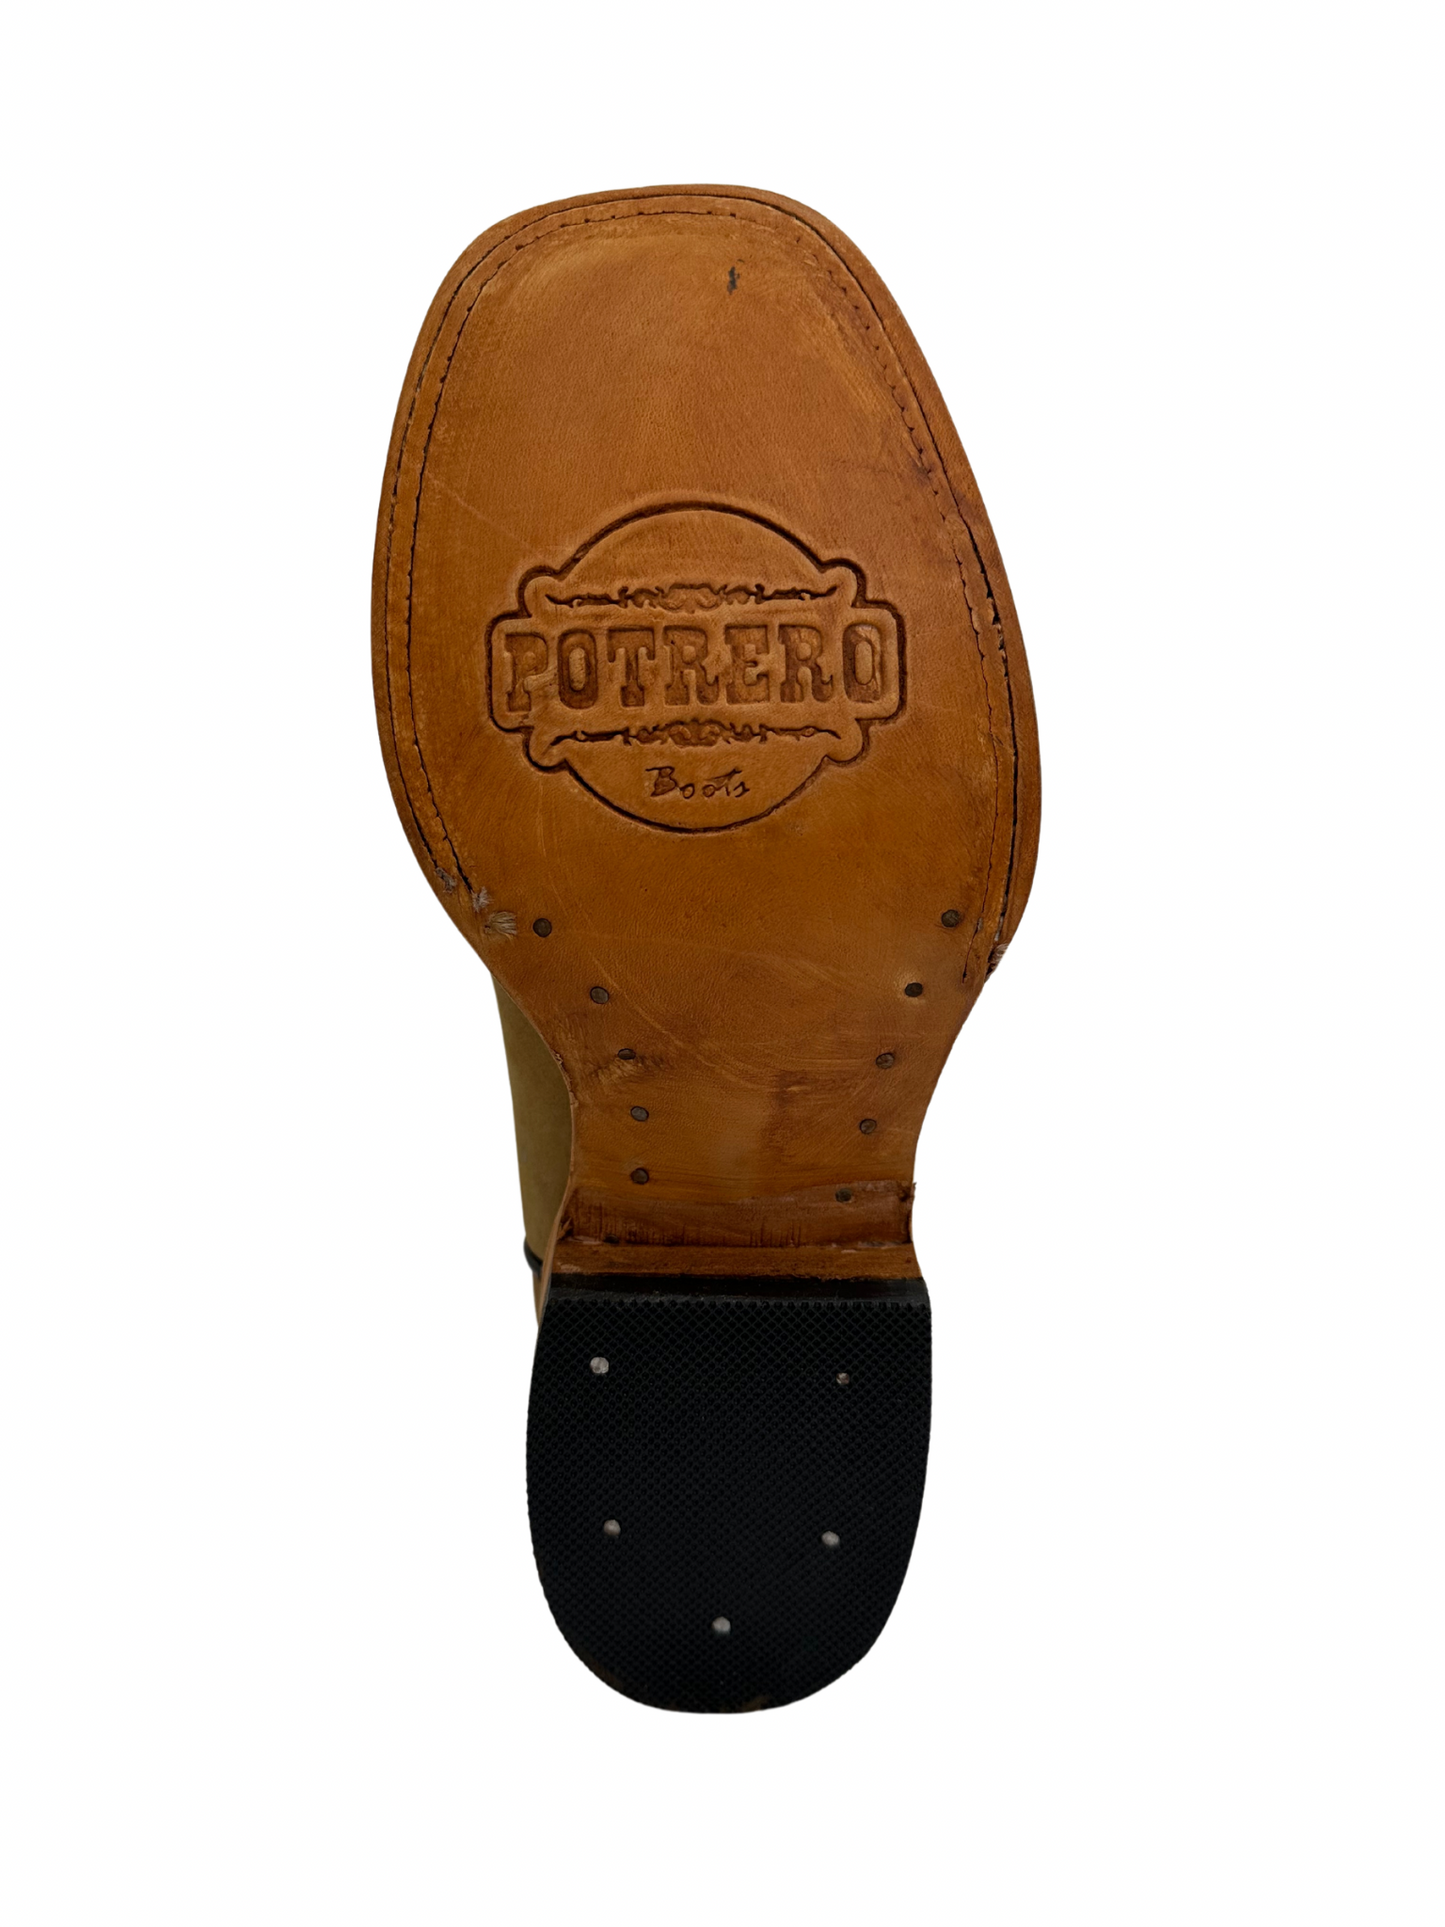 Potrero Boots Women's Nobuck Honey Aztec Wide Square Toe Leather Boot